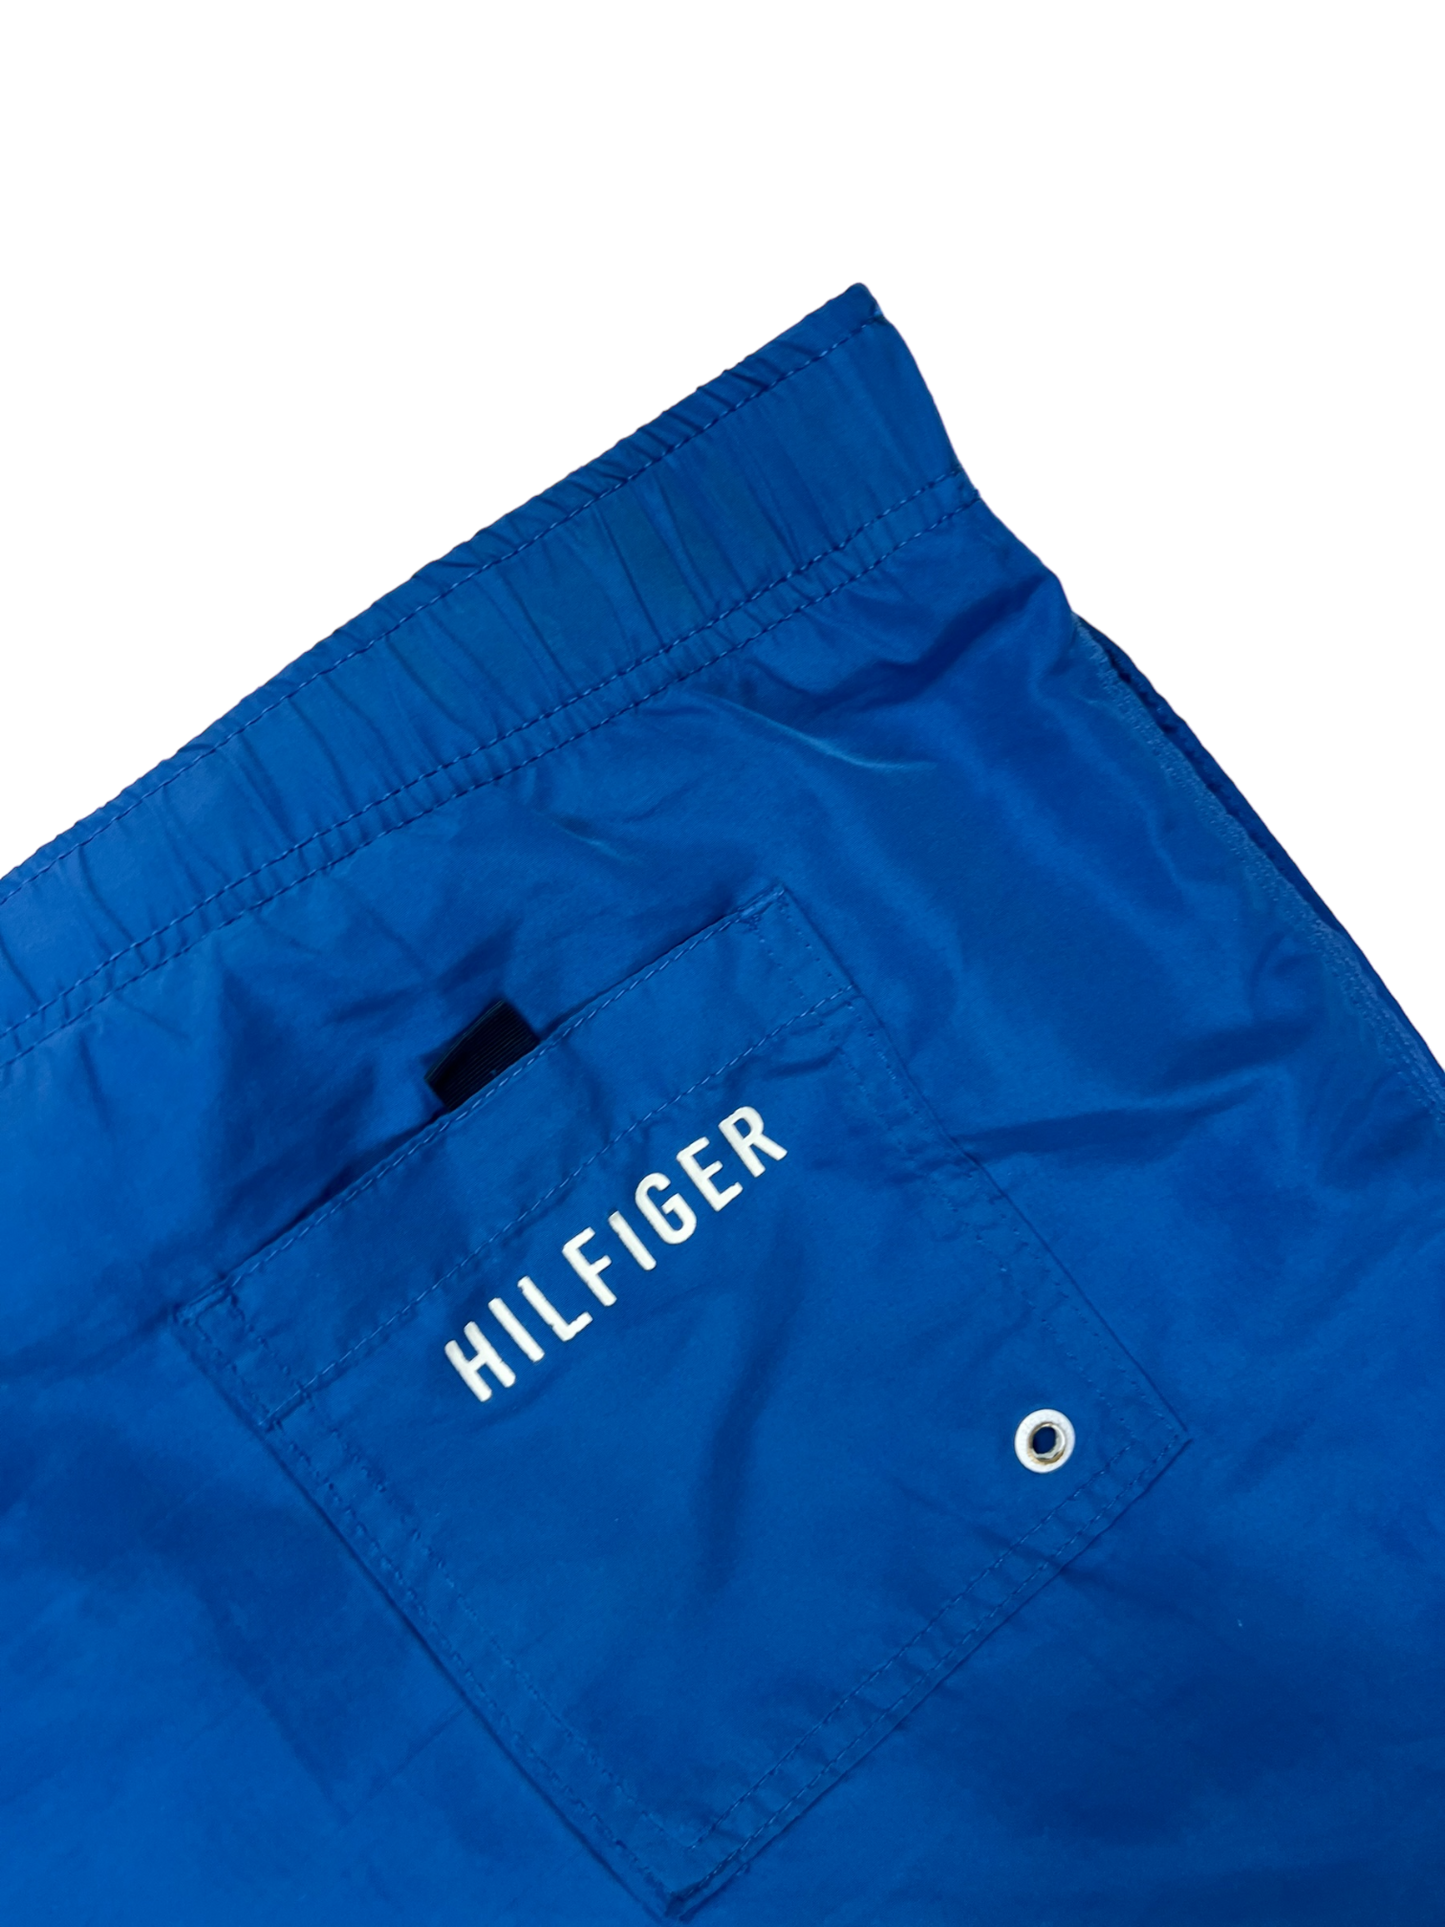 Tommy Hilfiger trunks - XL